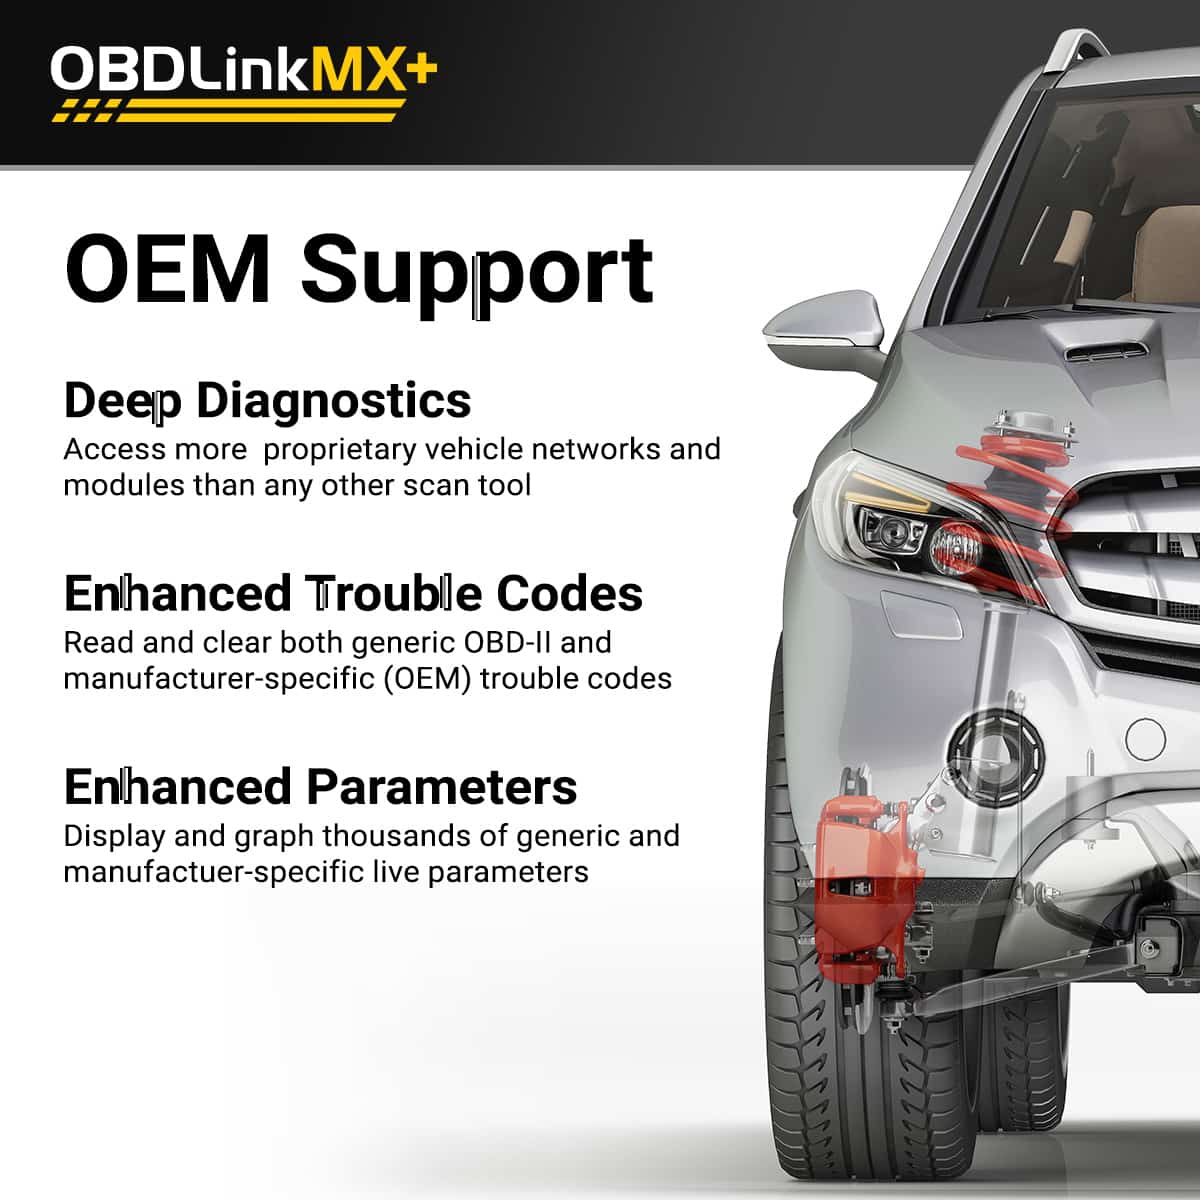 Rest assured that for some specific car brands, the OBDLink MX+ supports OEM-level diagnostics